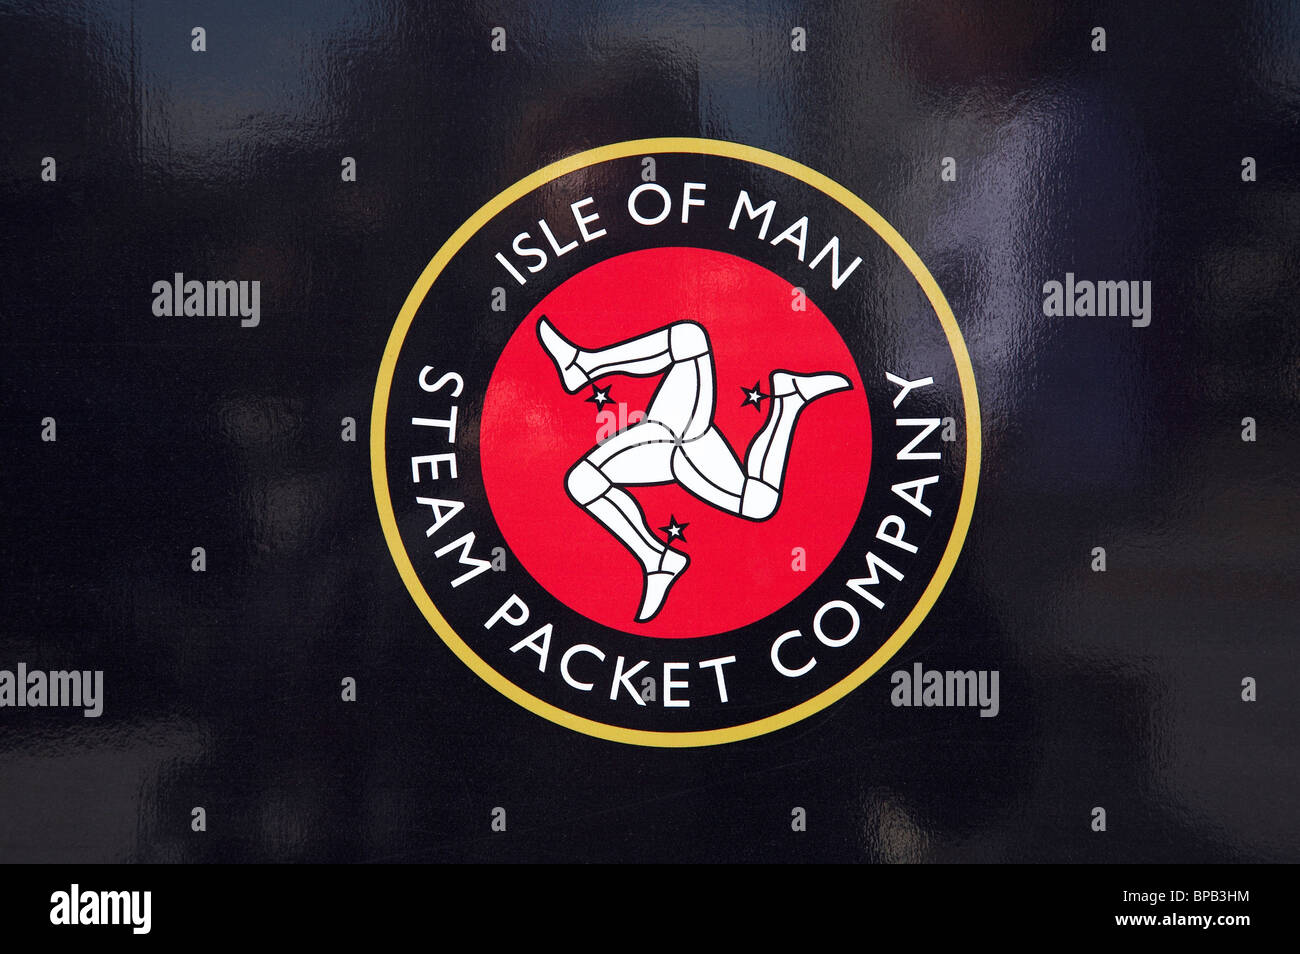 Isle of Man Steam Packet Company logo Stock Photo